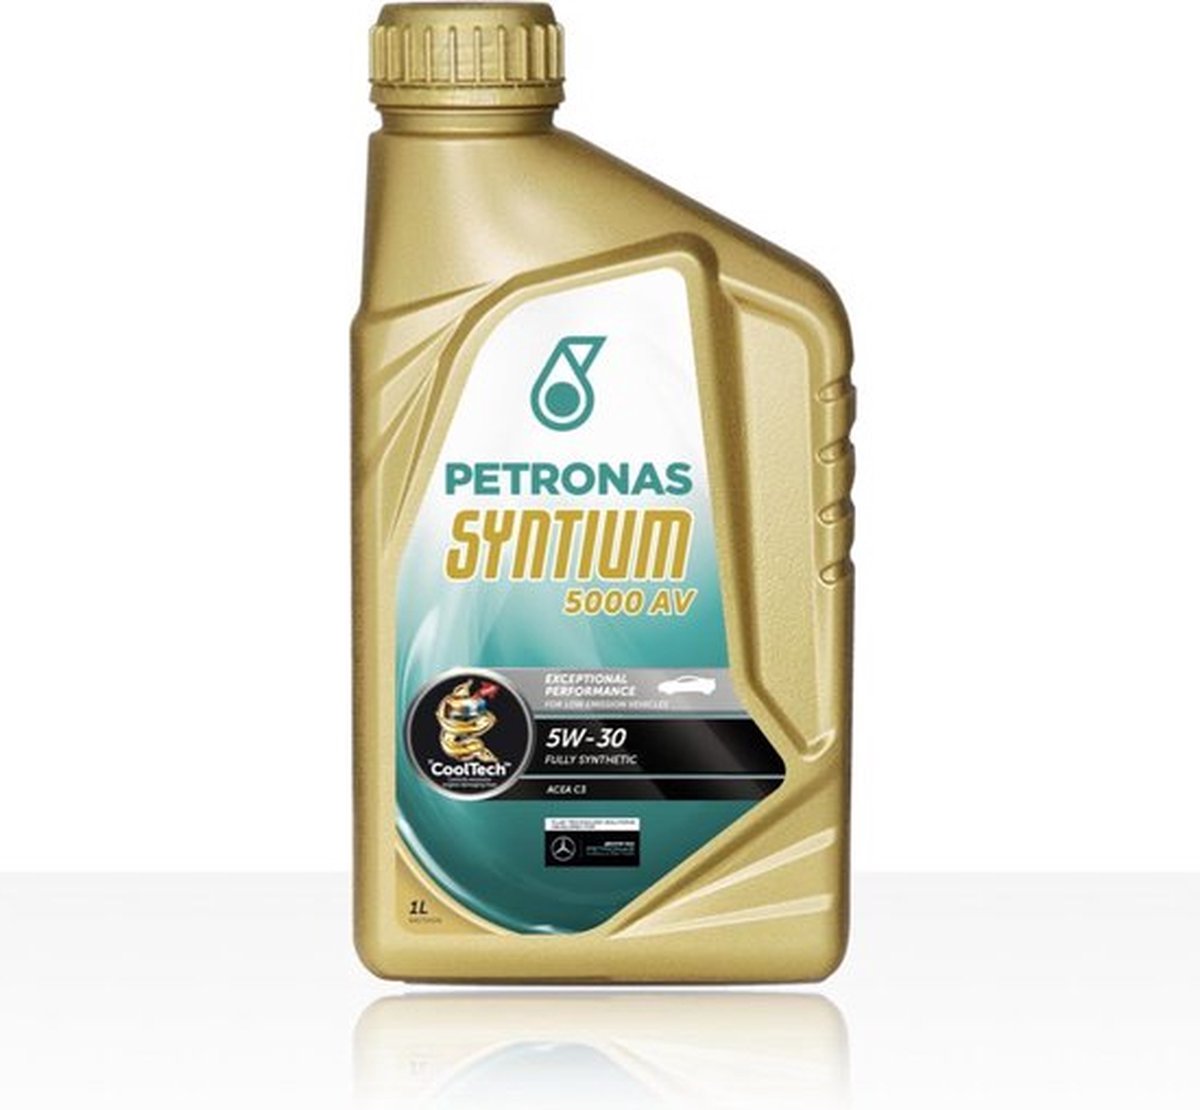 Petronas Syntium 5000 AV 5w-30 Synthetische motorolie - 1L - BMW / Mercedes / VW / Porsche